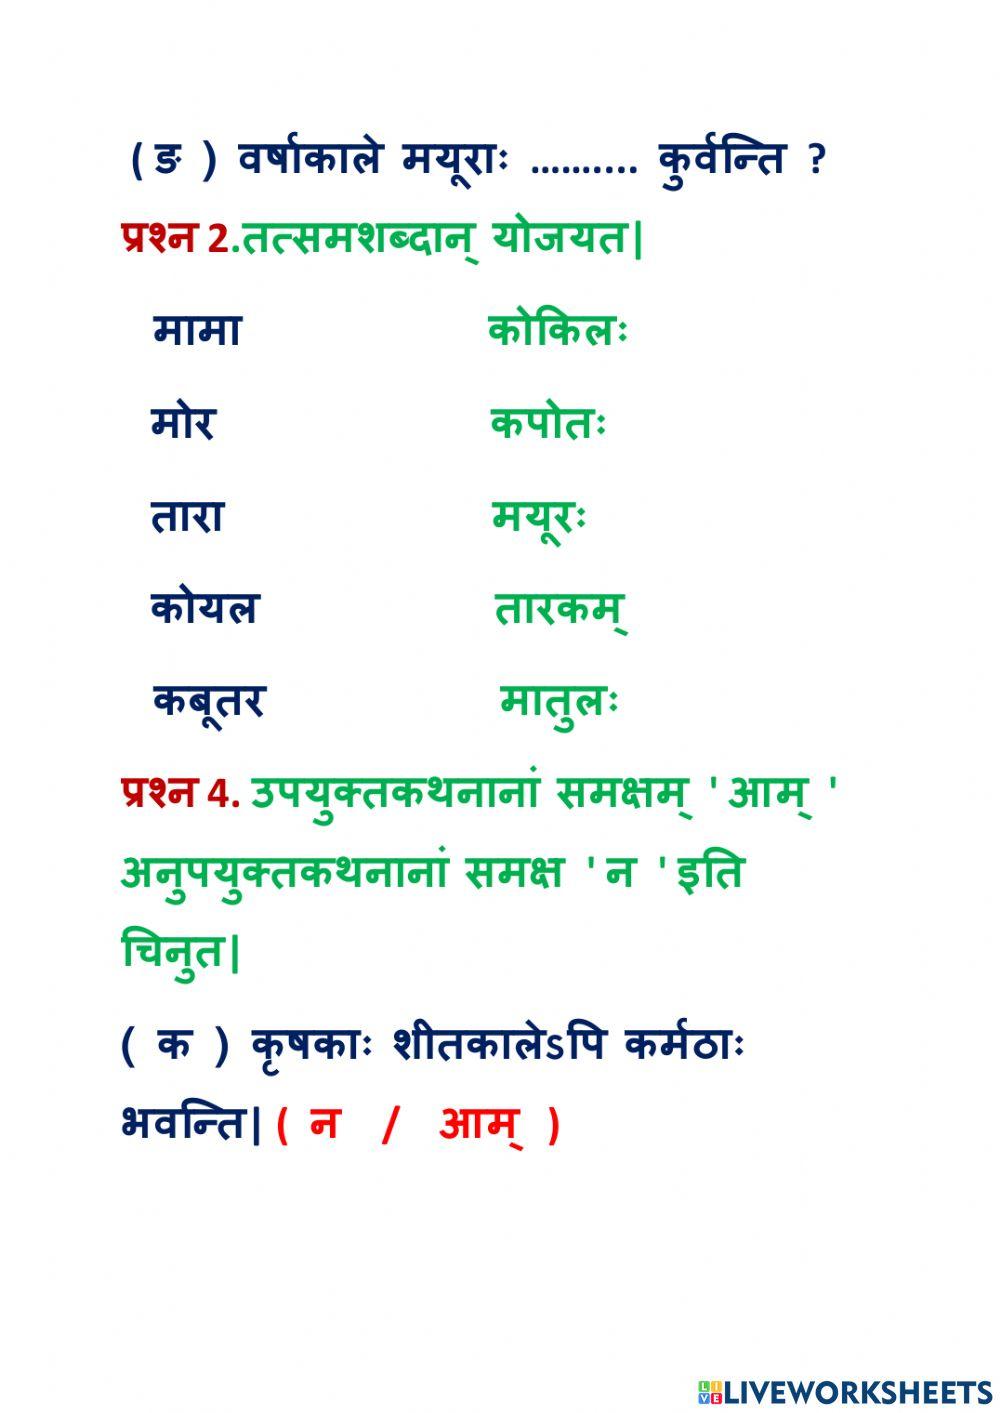 Liveworksheet class 6 sanskrit ch 10,14,15